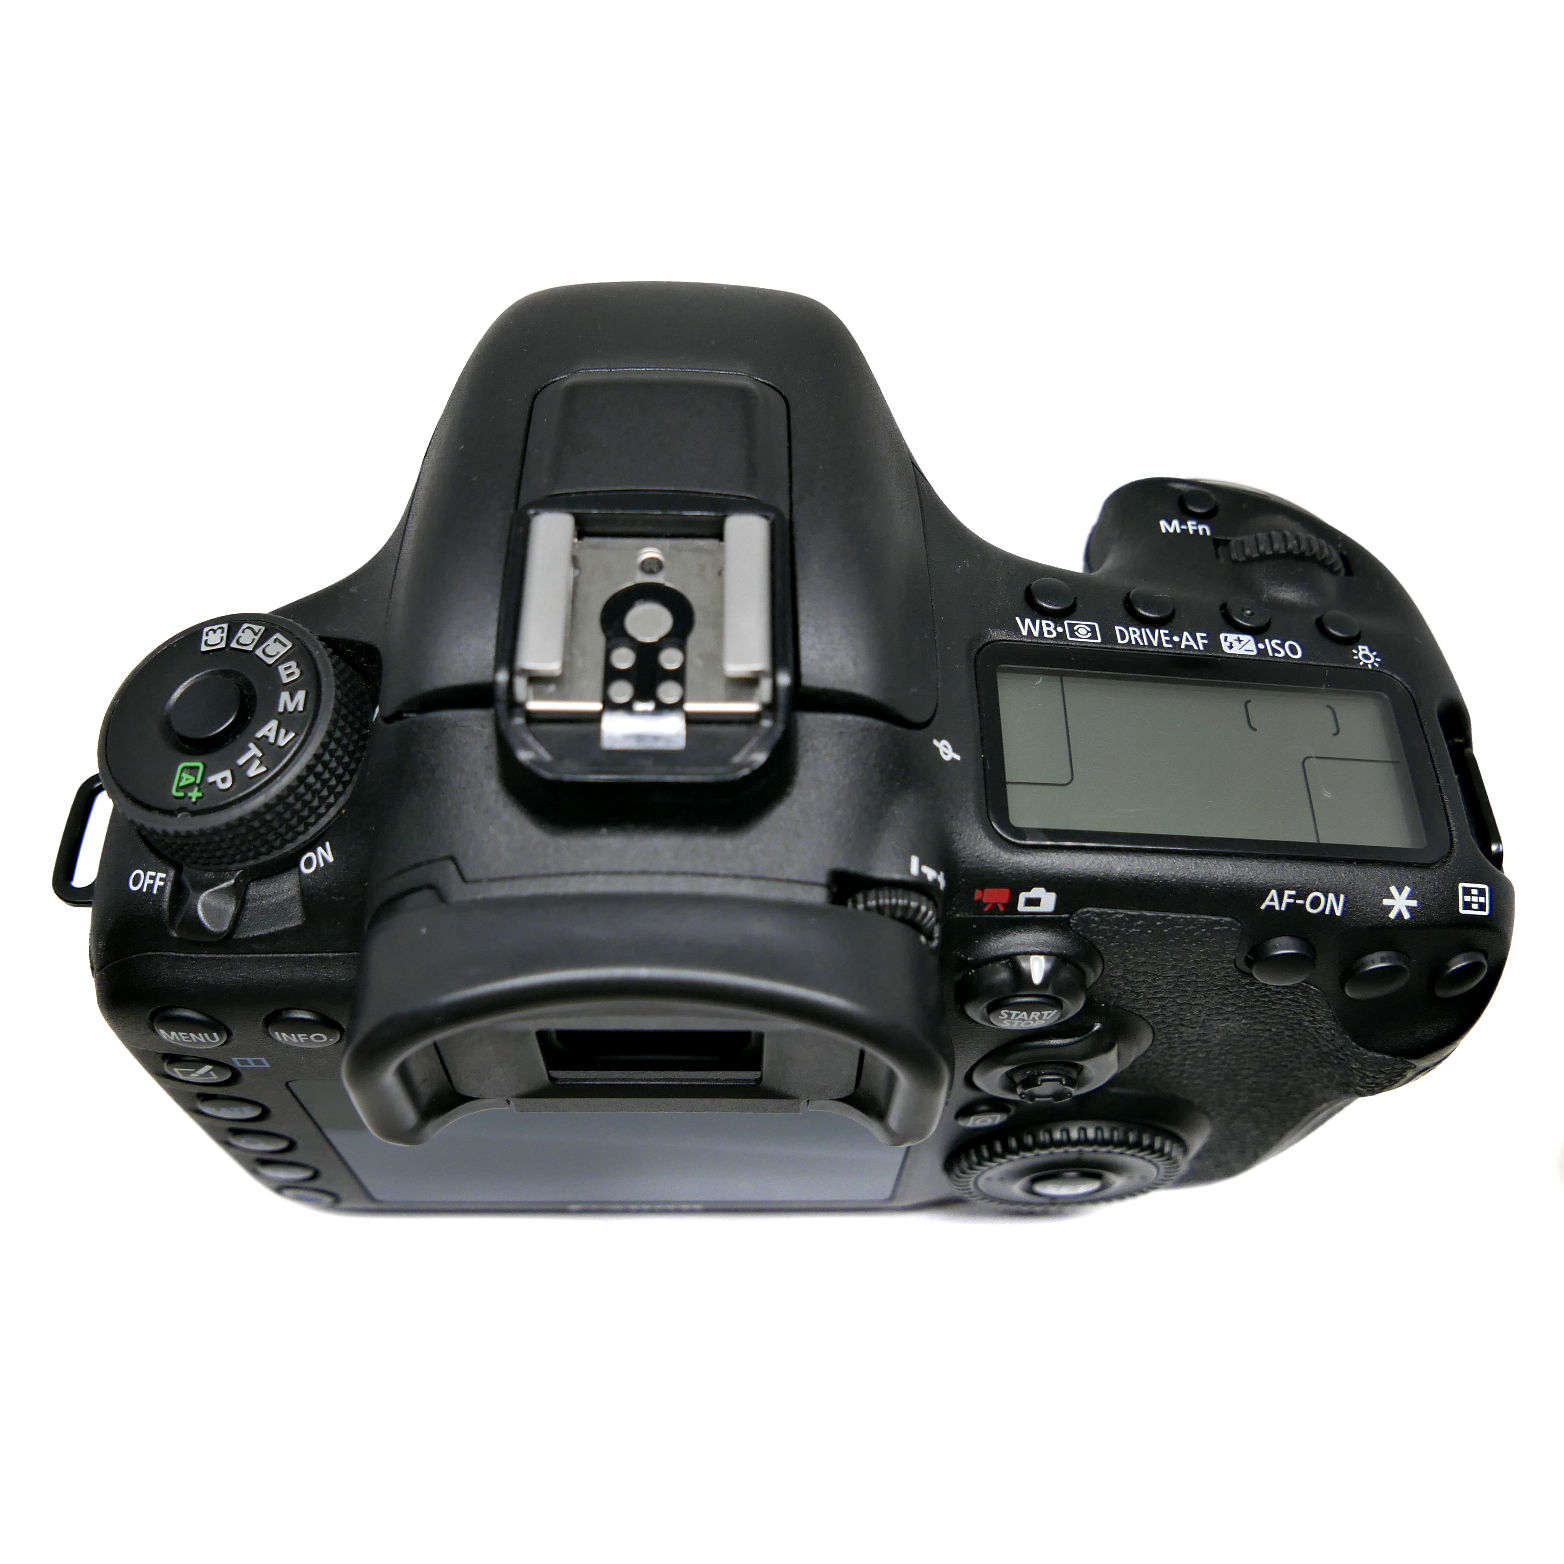 (Myyty) Canon EOS 7D Mark II (SC:54970) (käytetty)